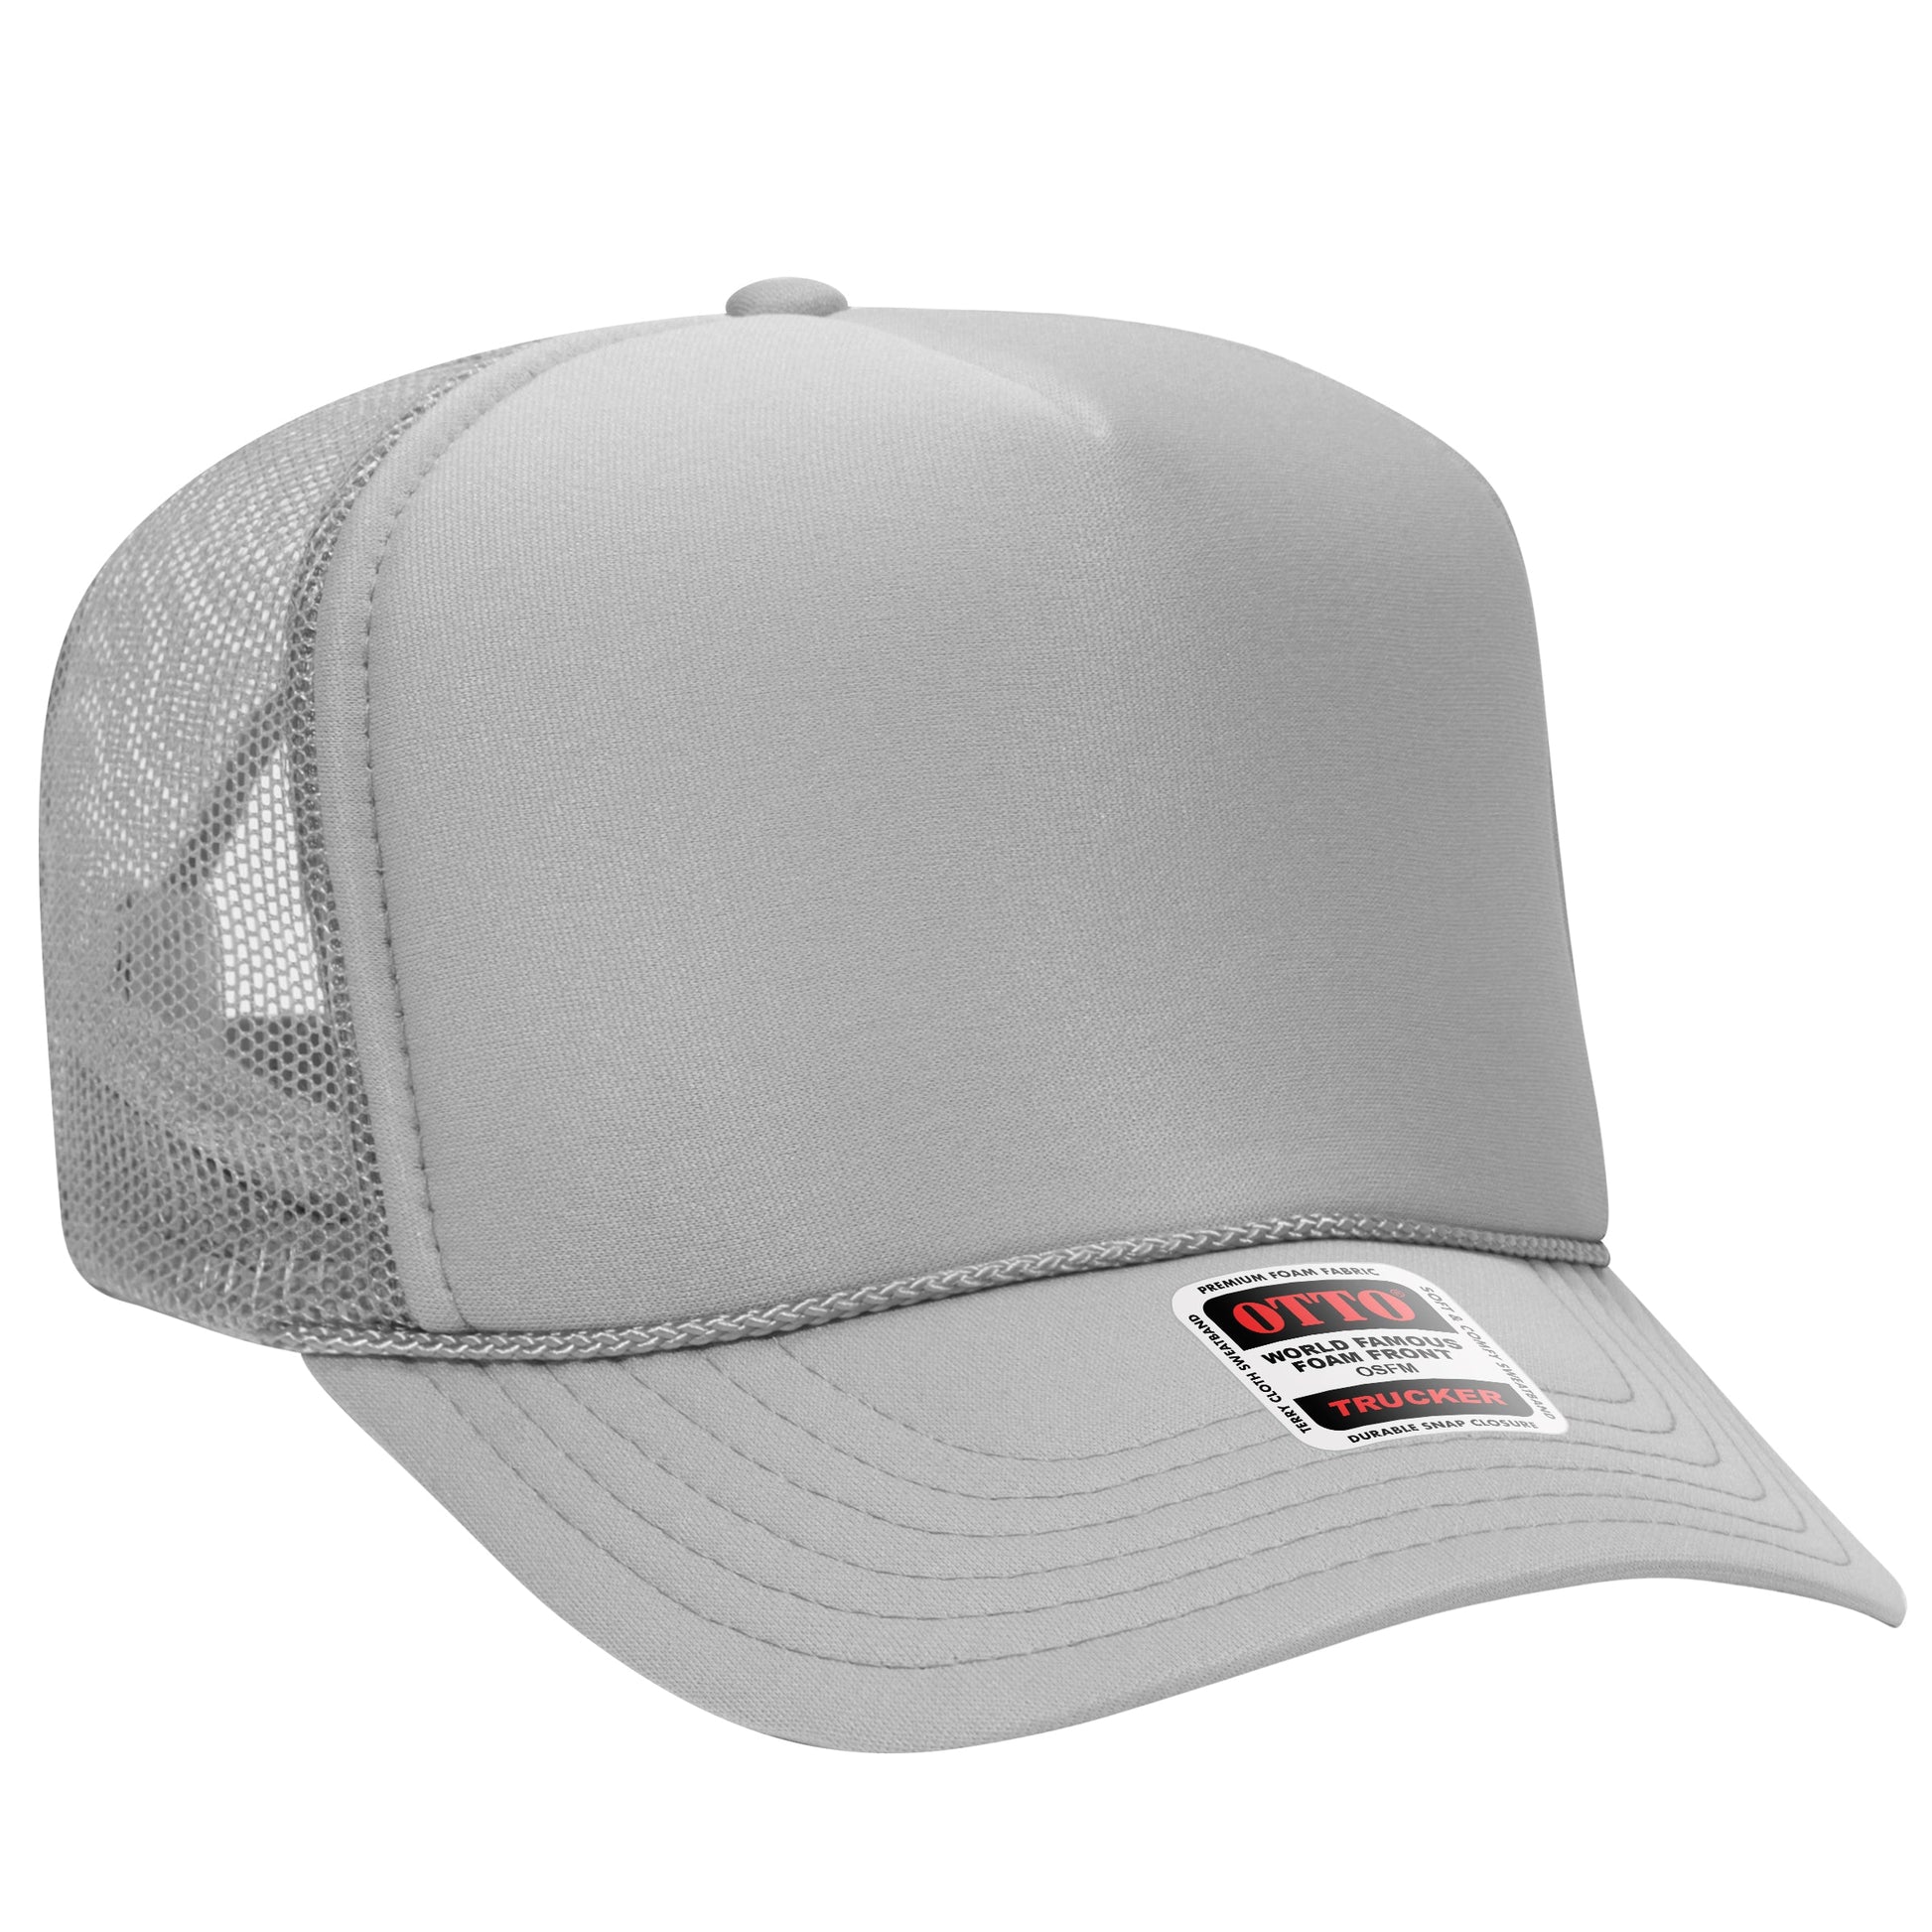 Otto Wholesale Cap 39-165 Mesh Back Trucker Hats (12 Hats) - Black